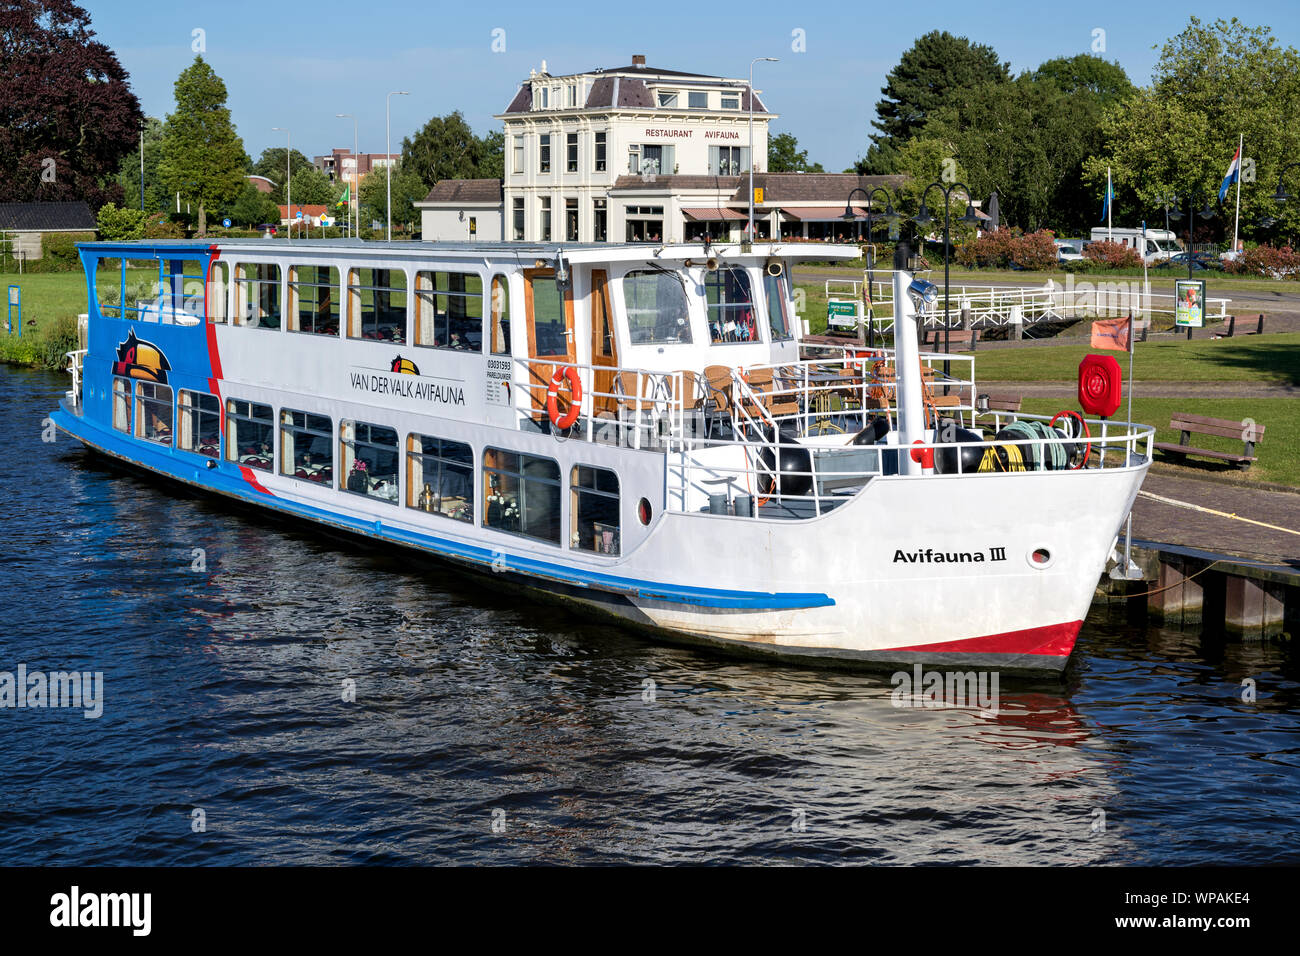 Excursion boat AVIVAUNA III of Van der Valk. Van der Valk is the largest Dutch hospitality chain and also operates the Avifauna Bird Park. Stock Photo